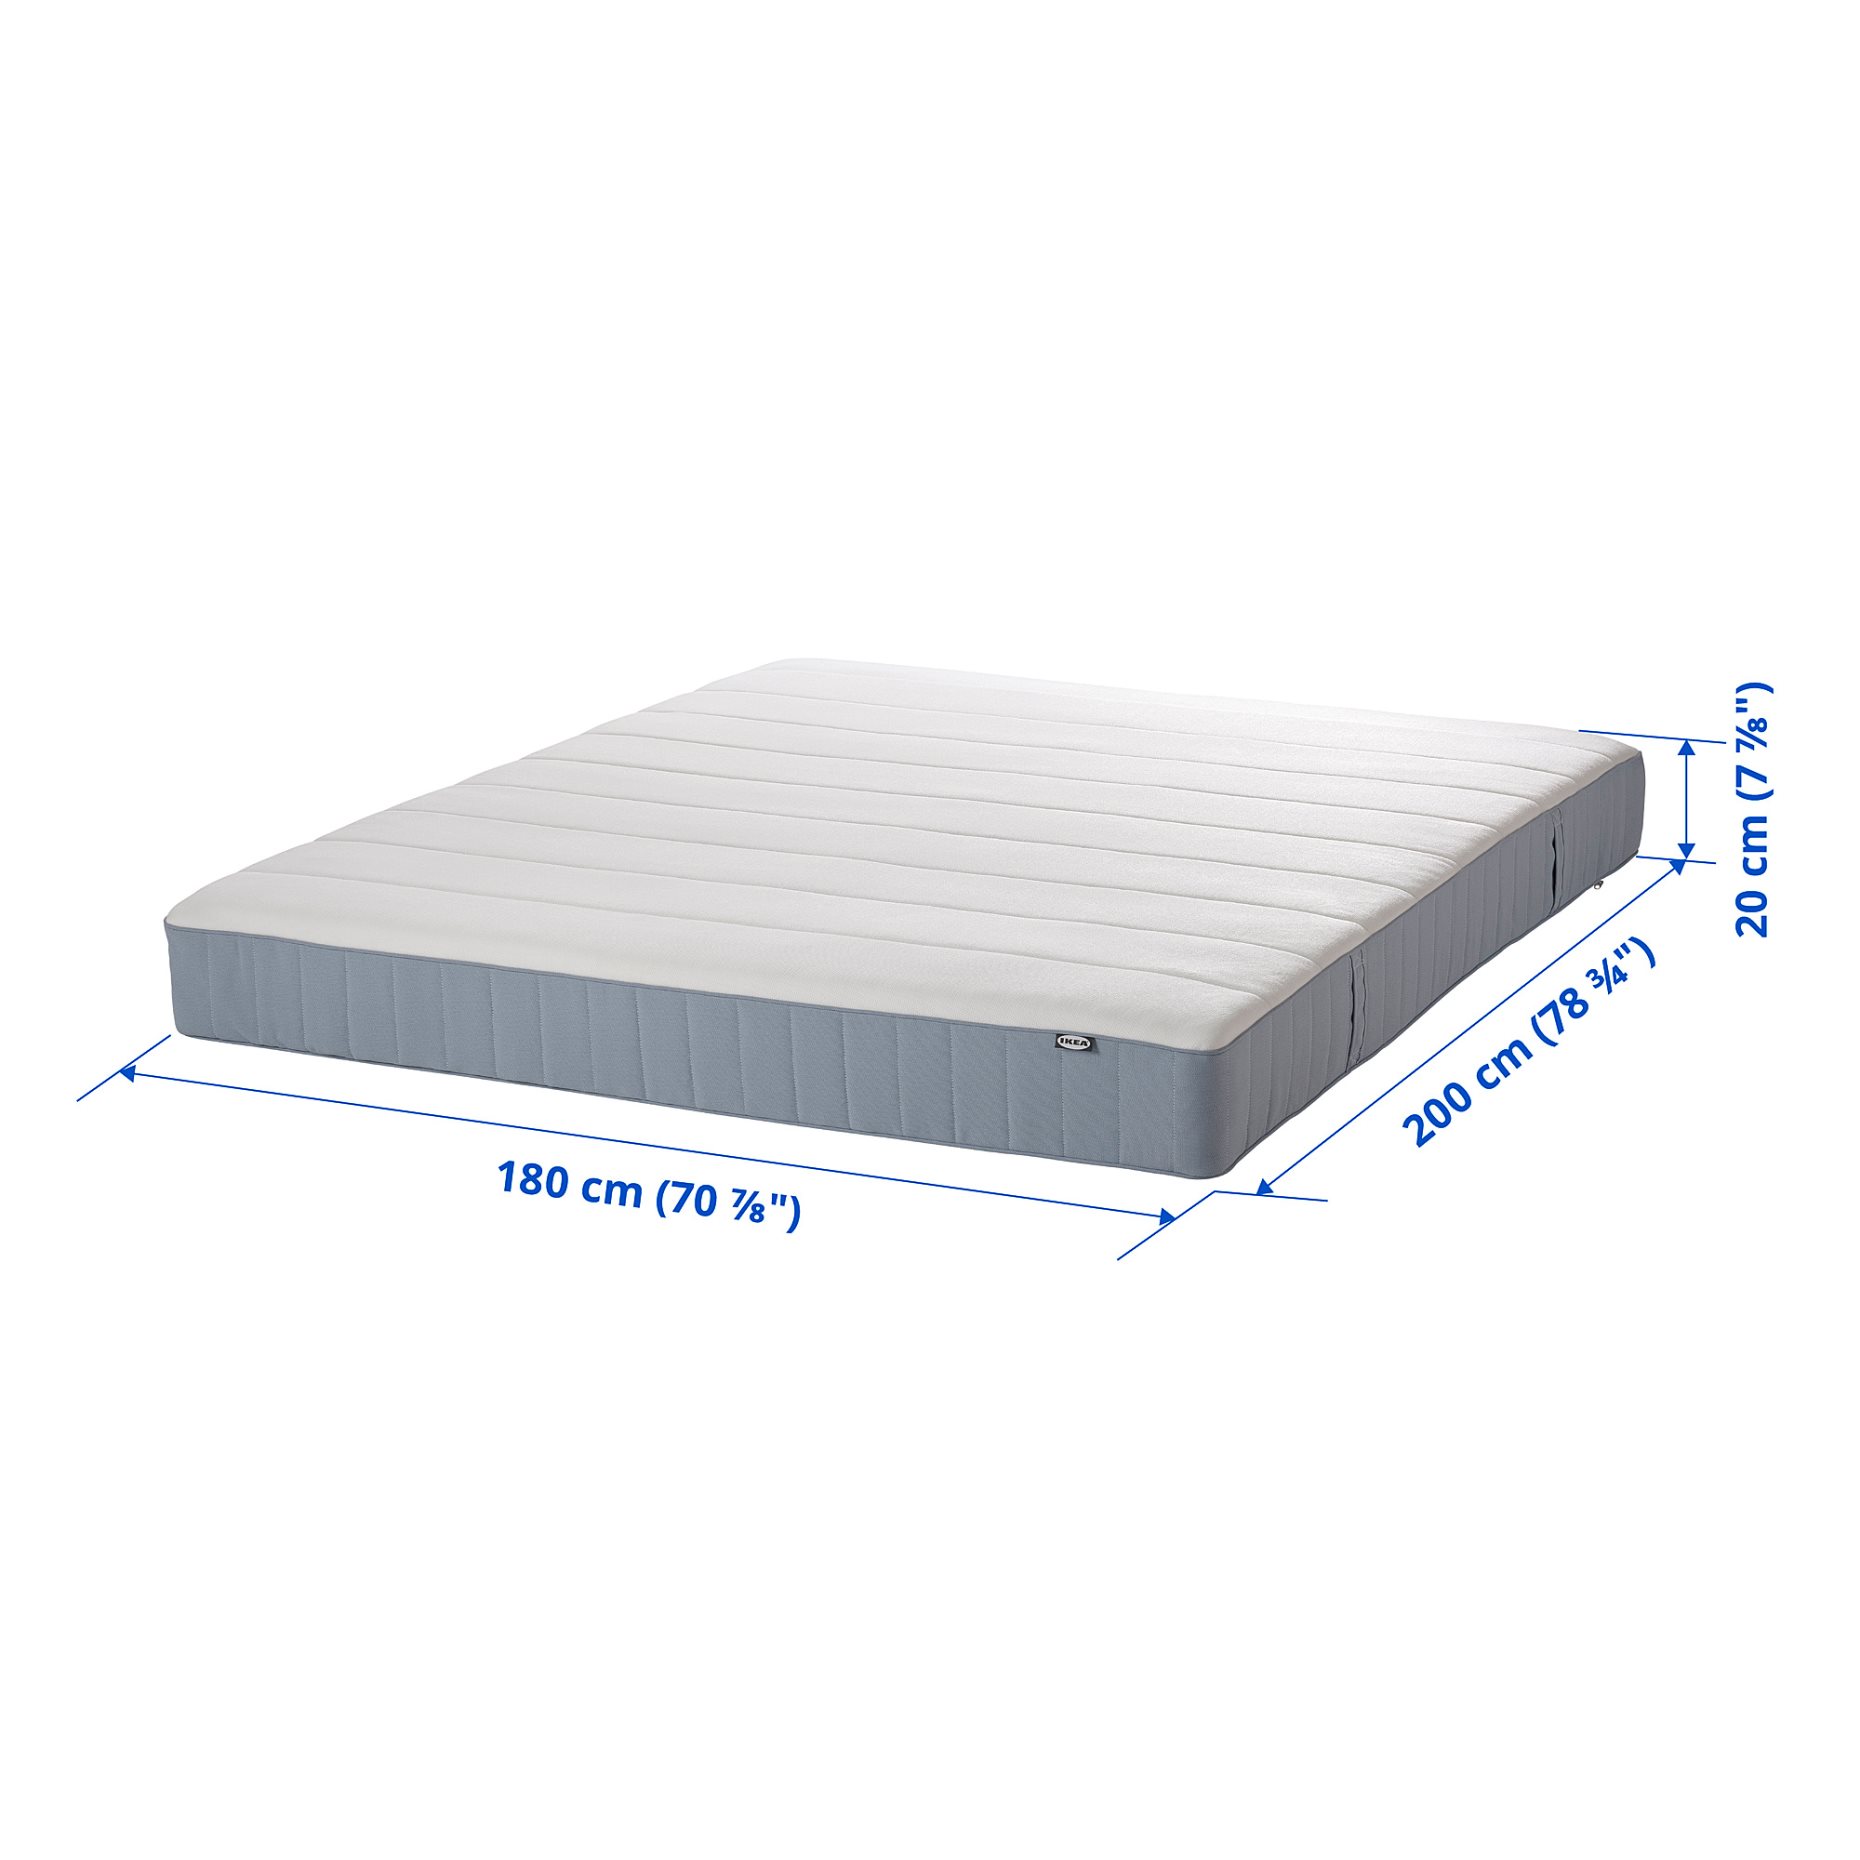 VESTERÖY, pocket sprung mattress/firm, 180x200 cm, 304.701.17